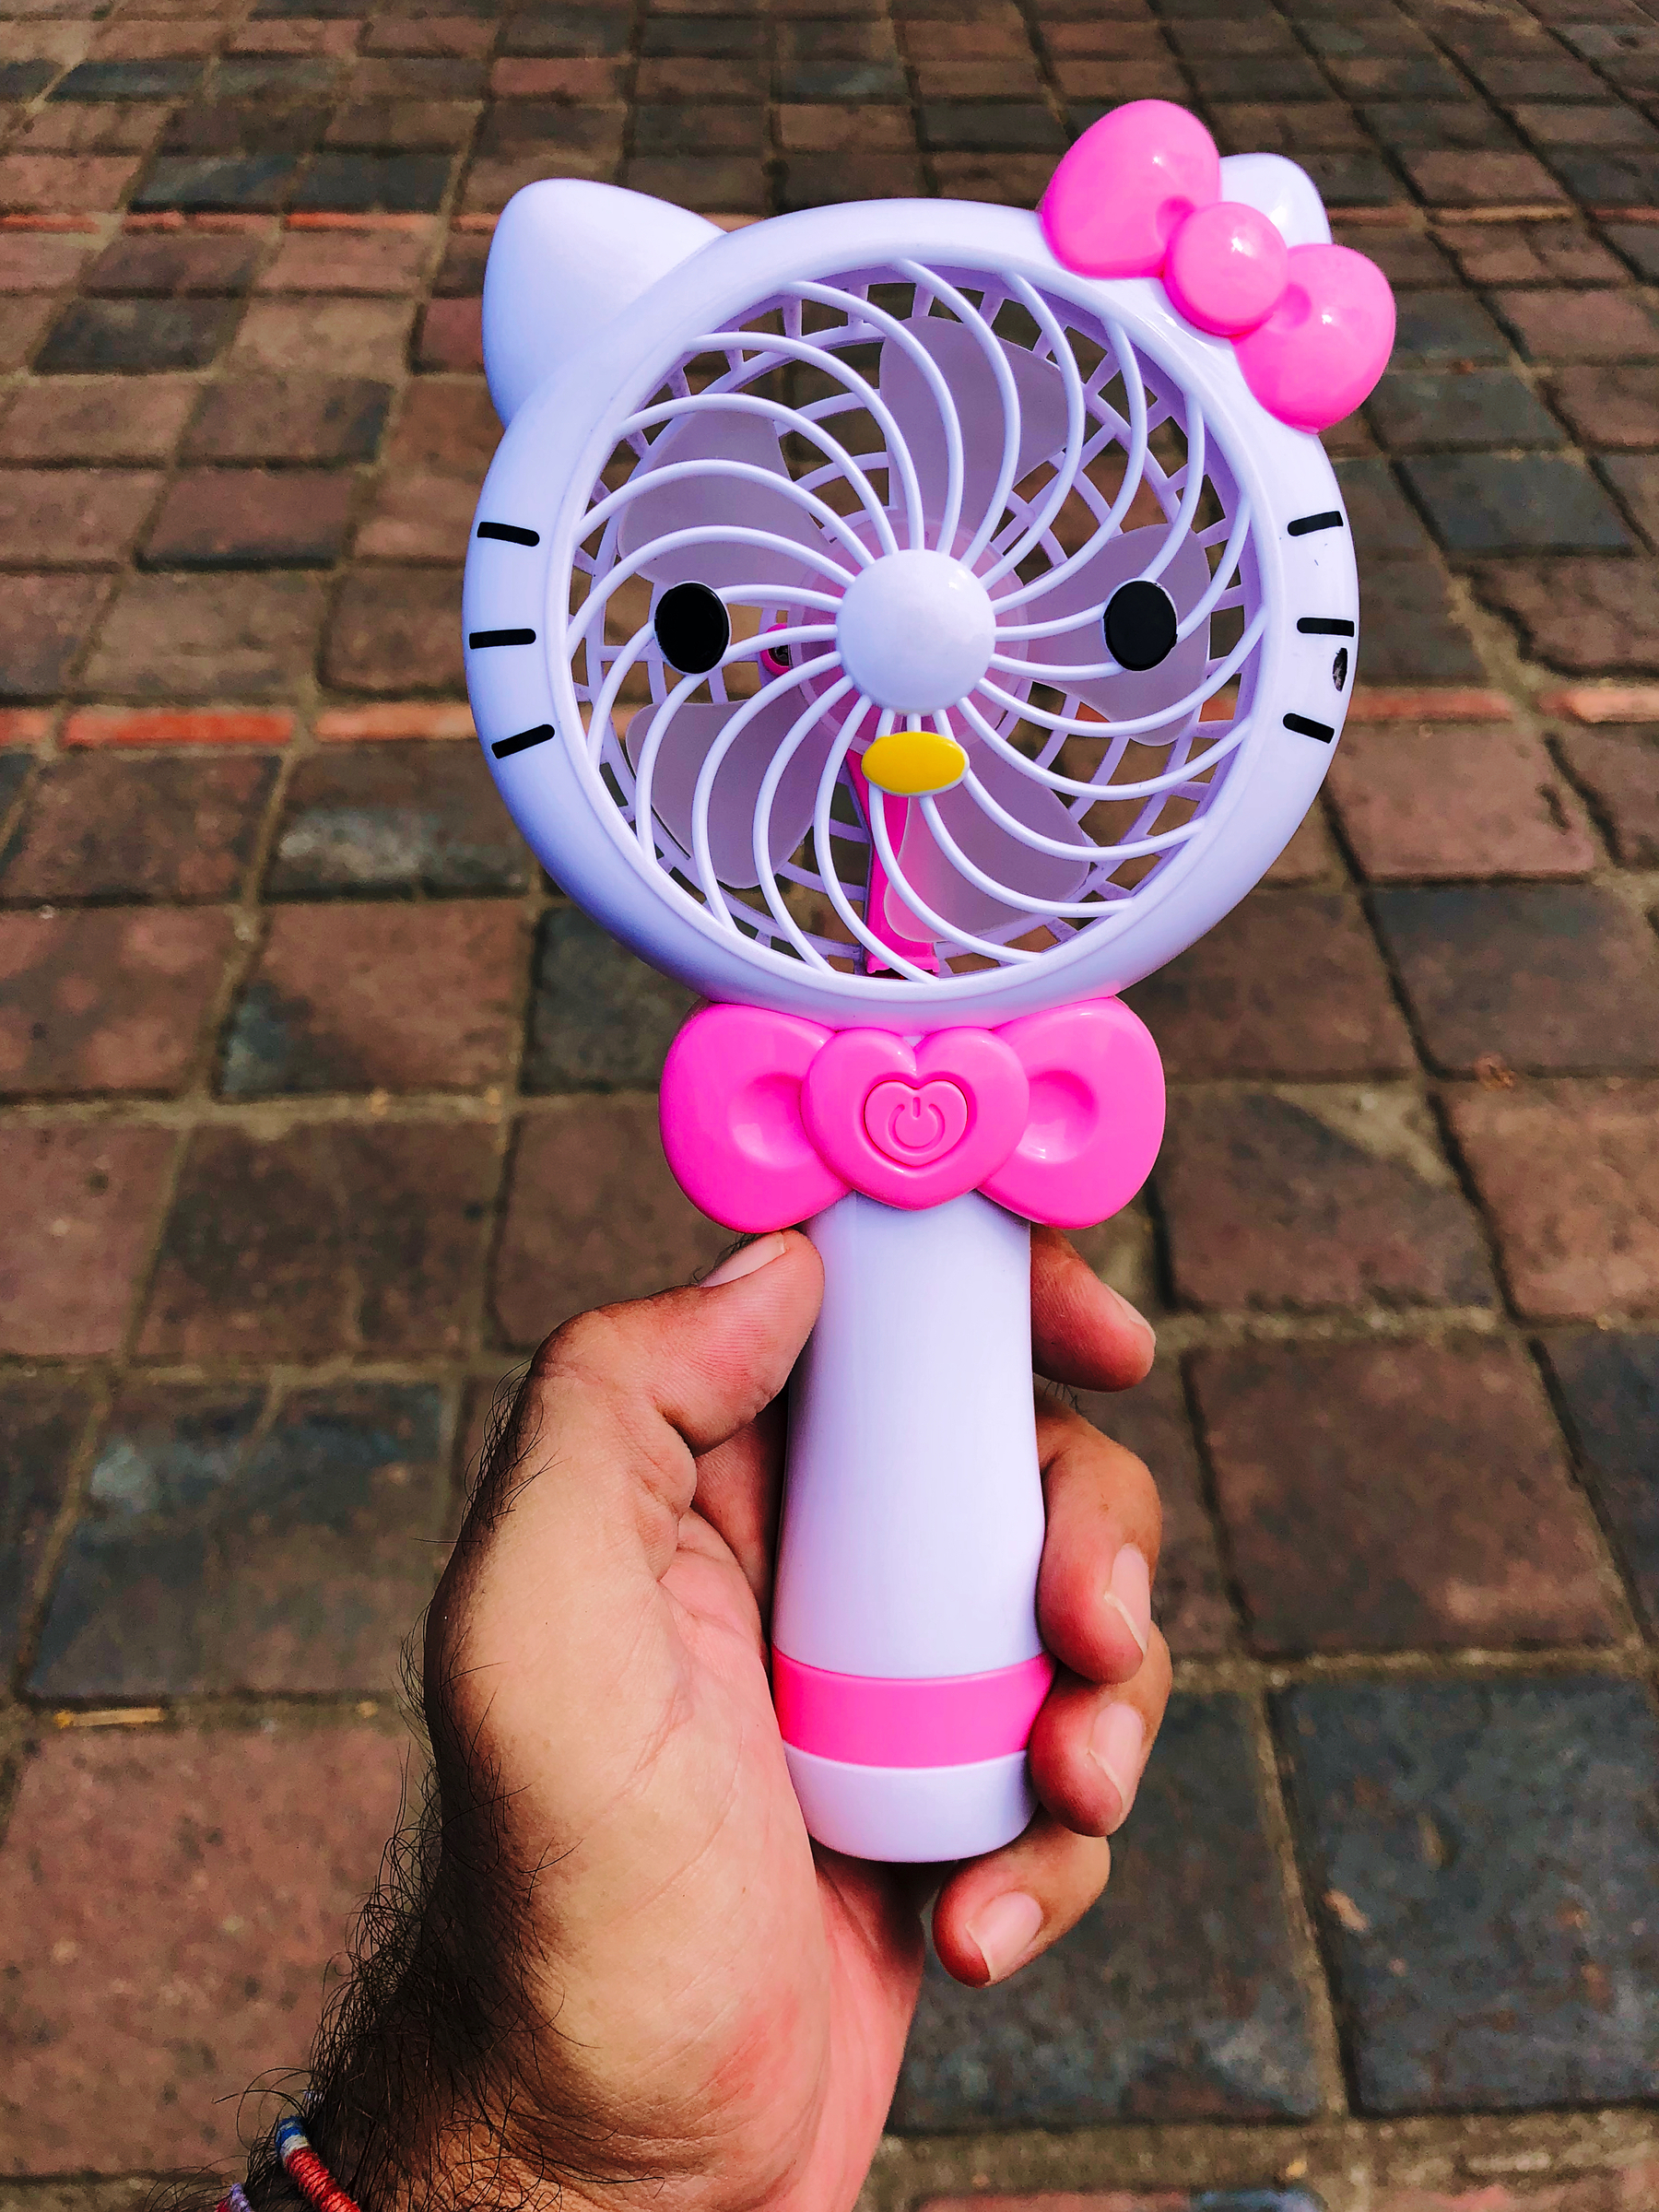 A hand holds a mini fan that looks like Hello Kitty